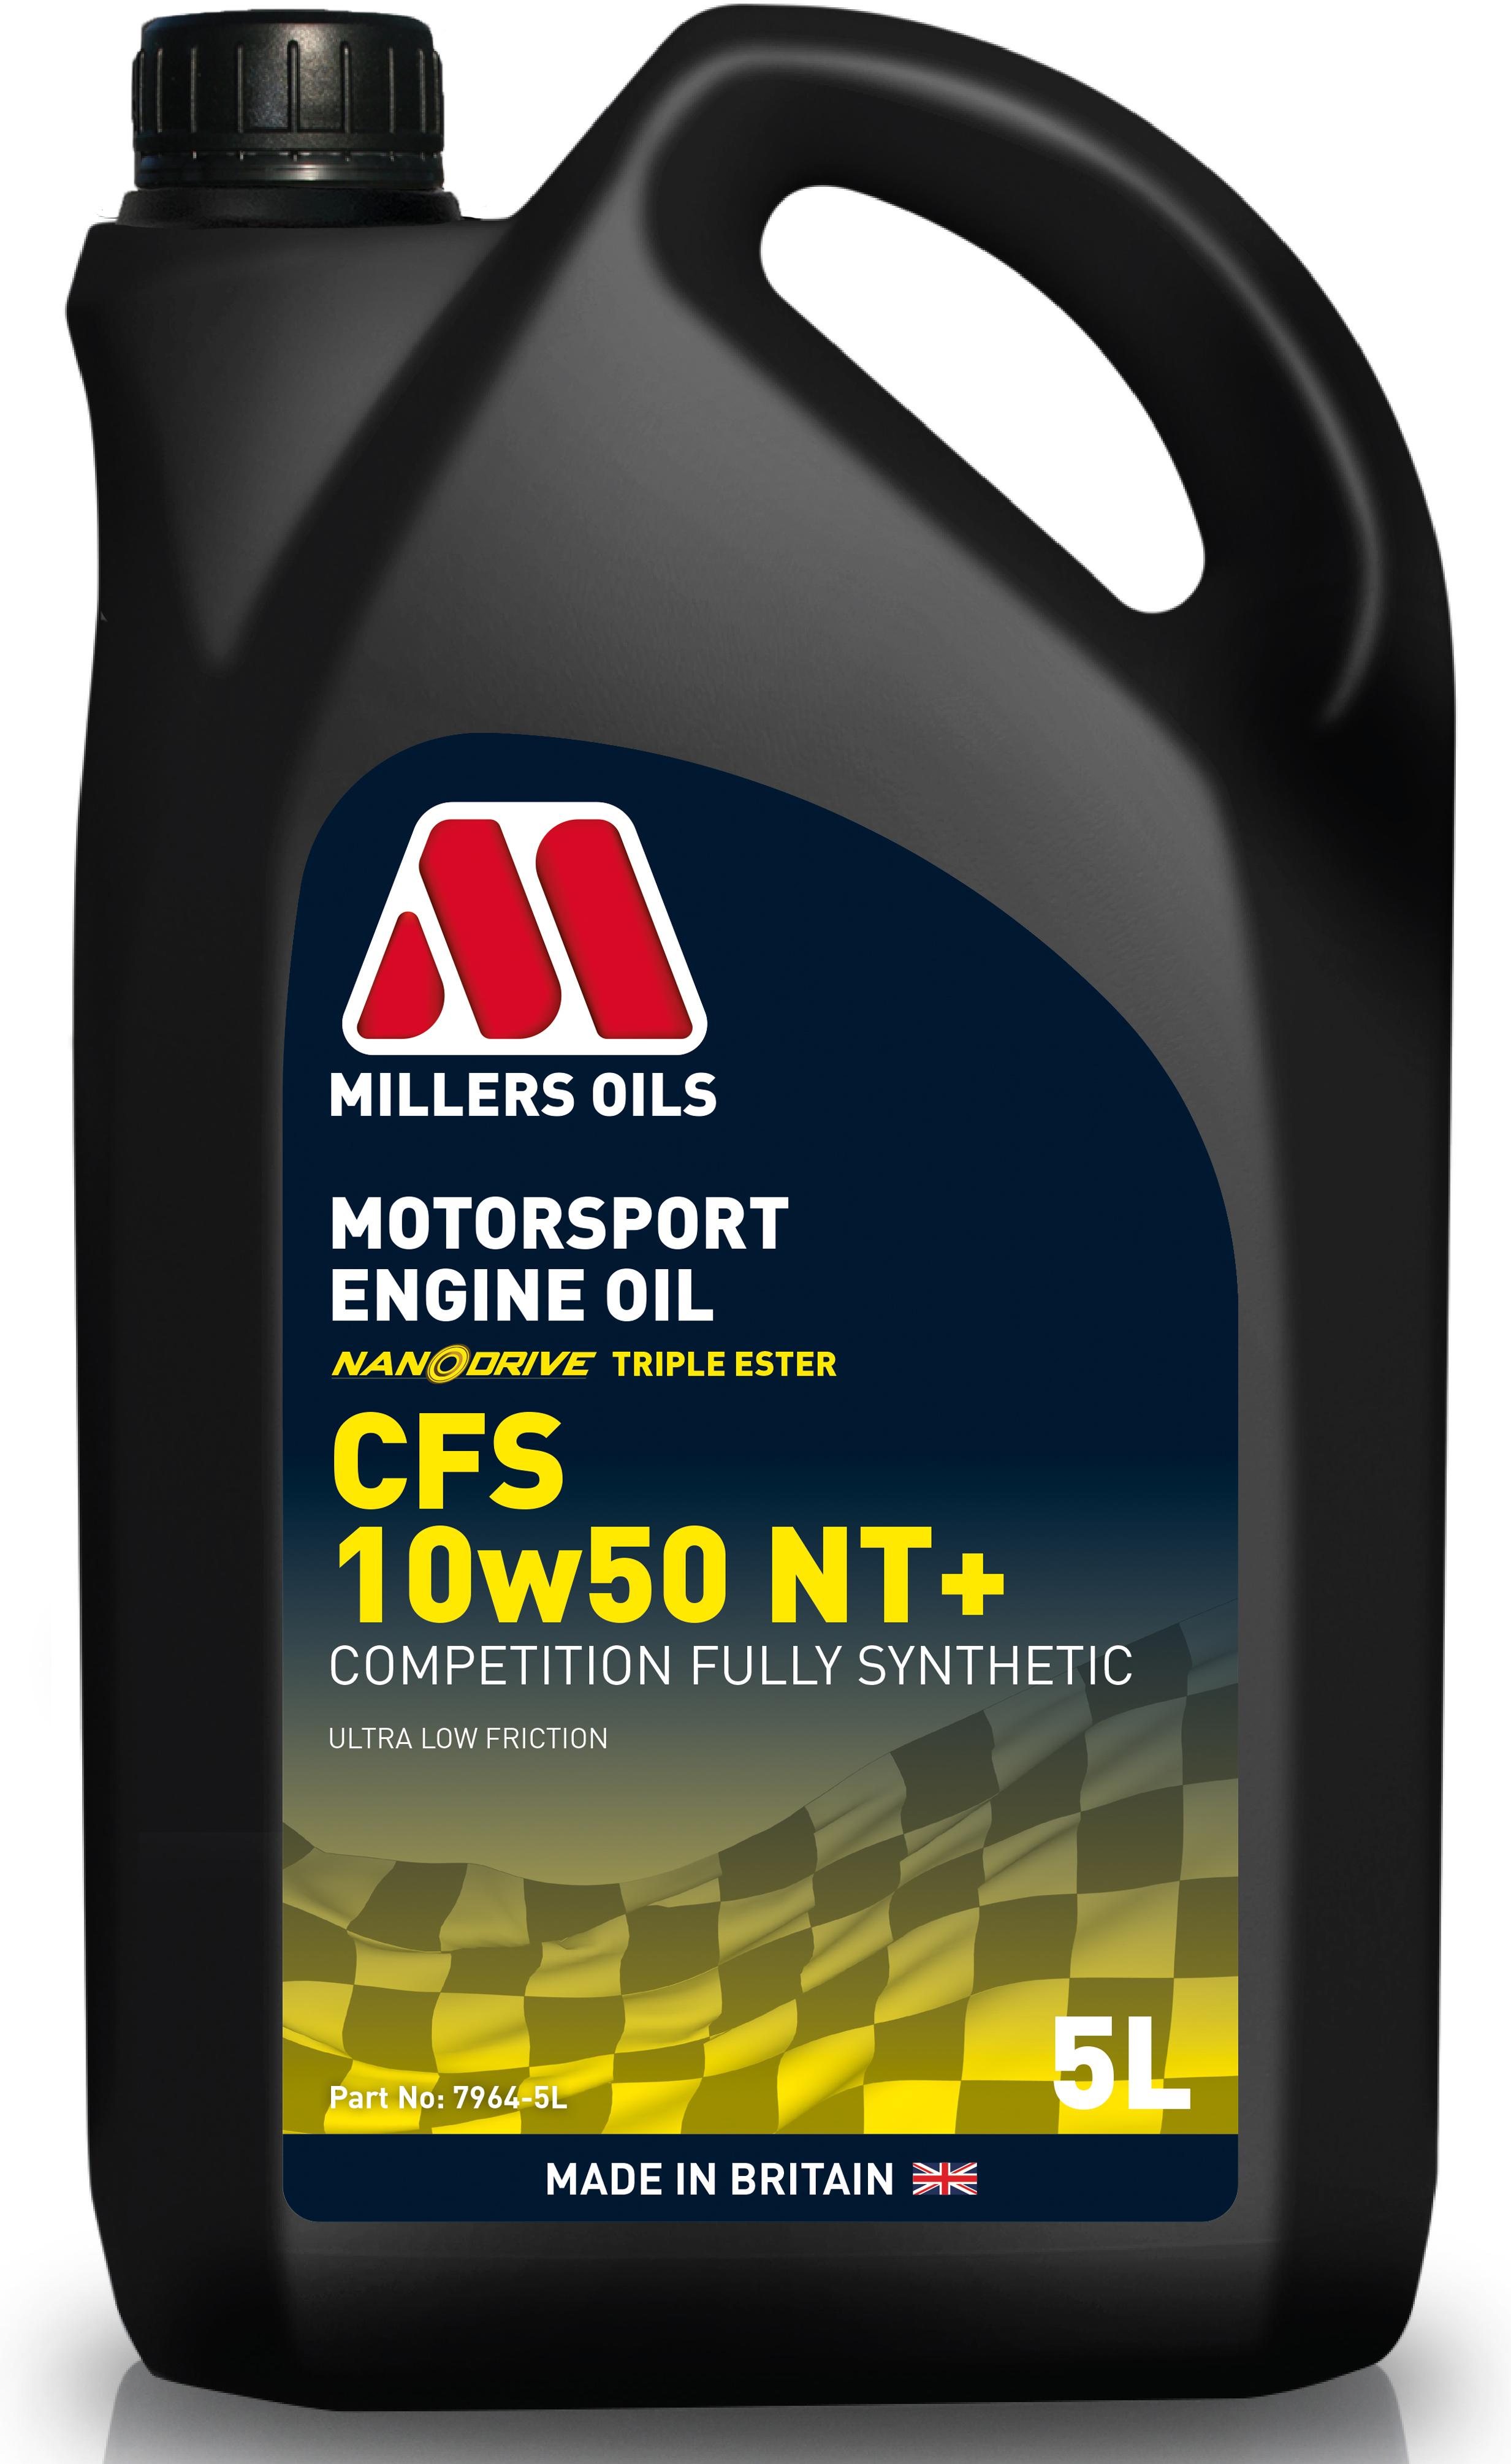 Millers Oils Cfs 10W50 Nt+ Motorsport Engine Oil - 5L